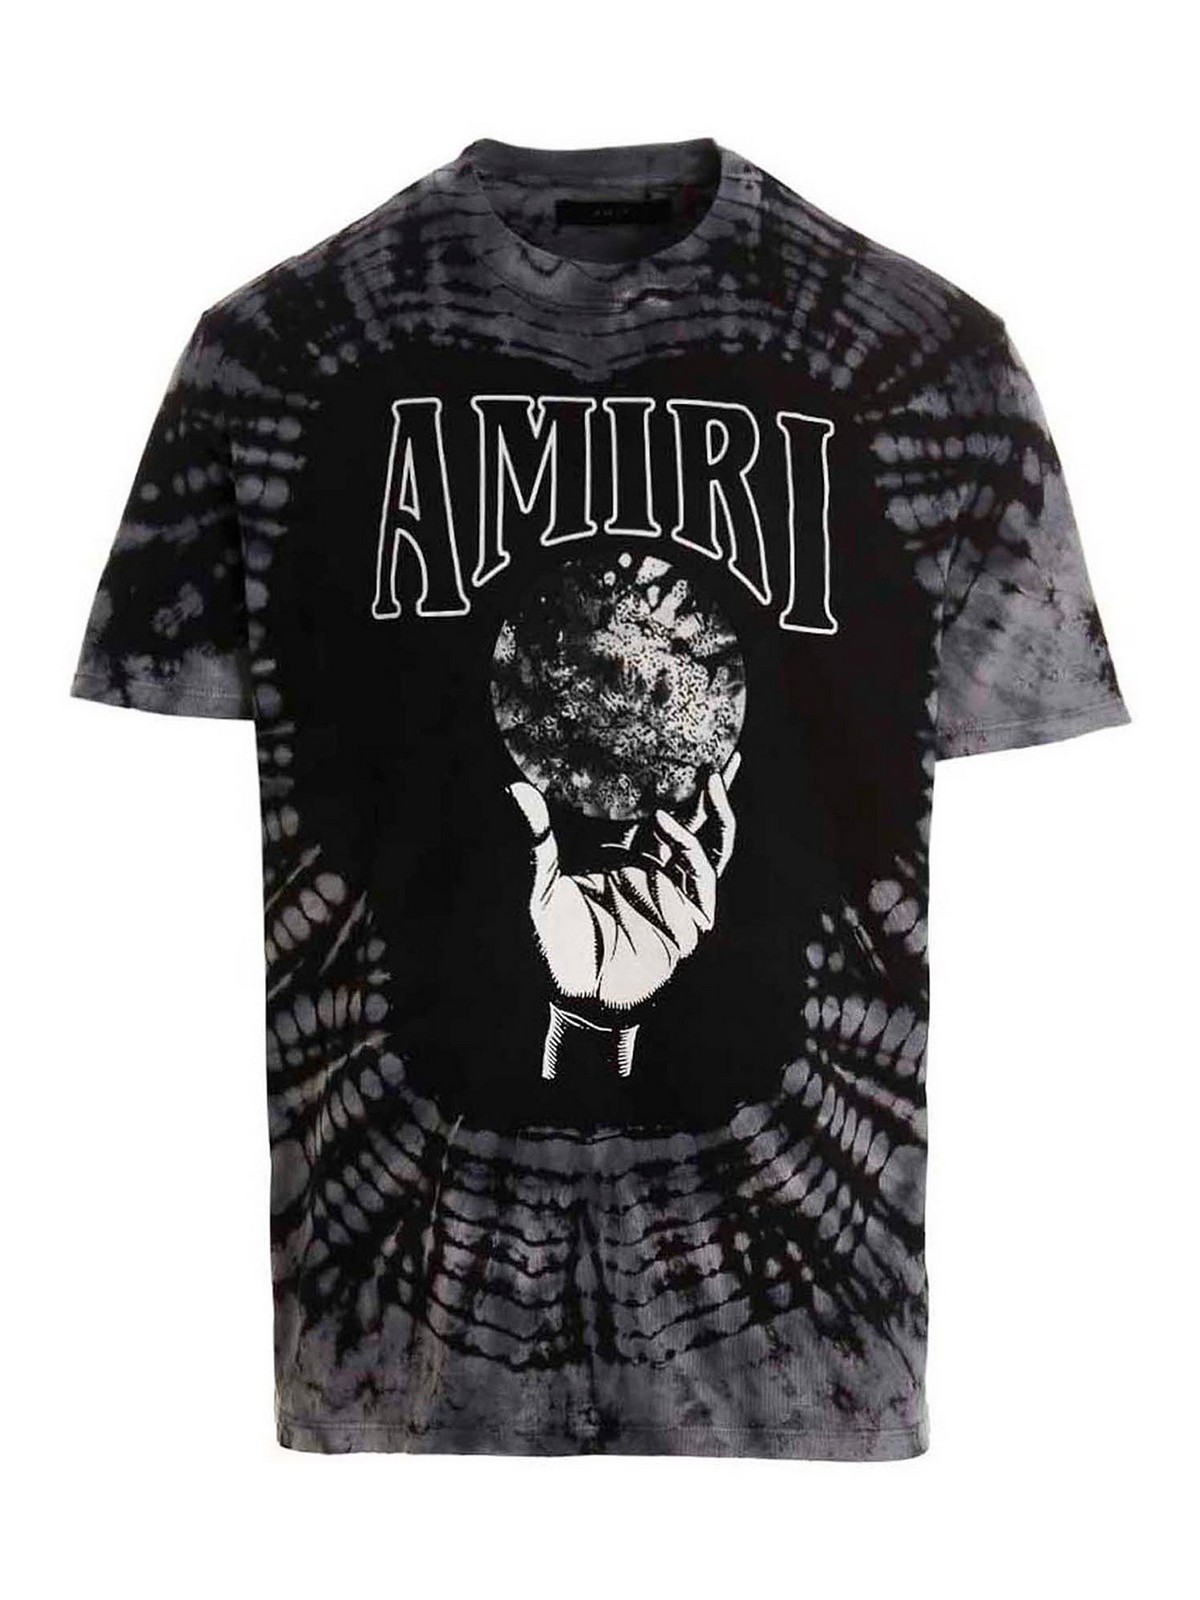 Amiri Crystal Ball Tie-Dye T-Shirt